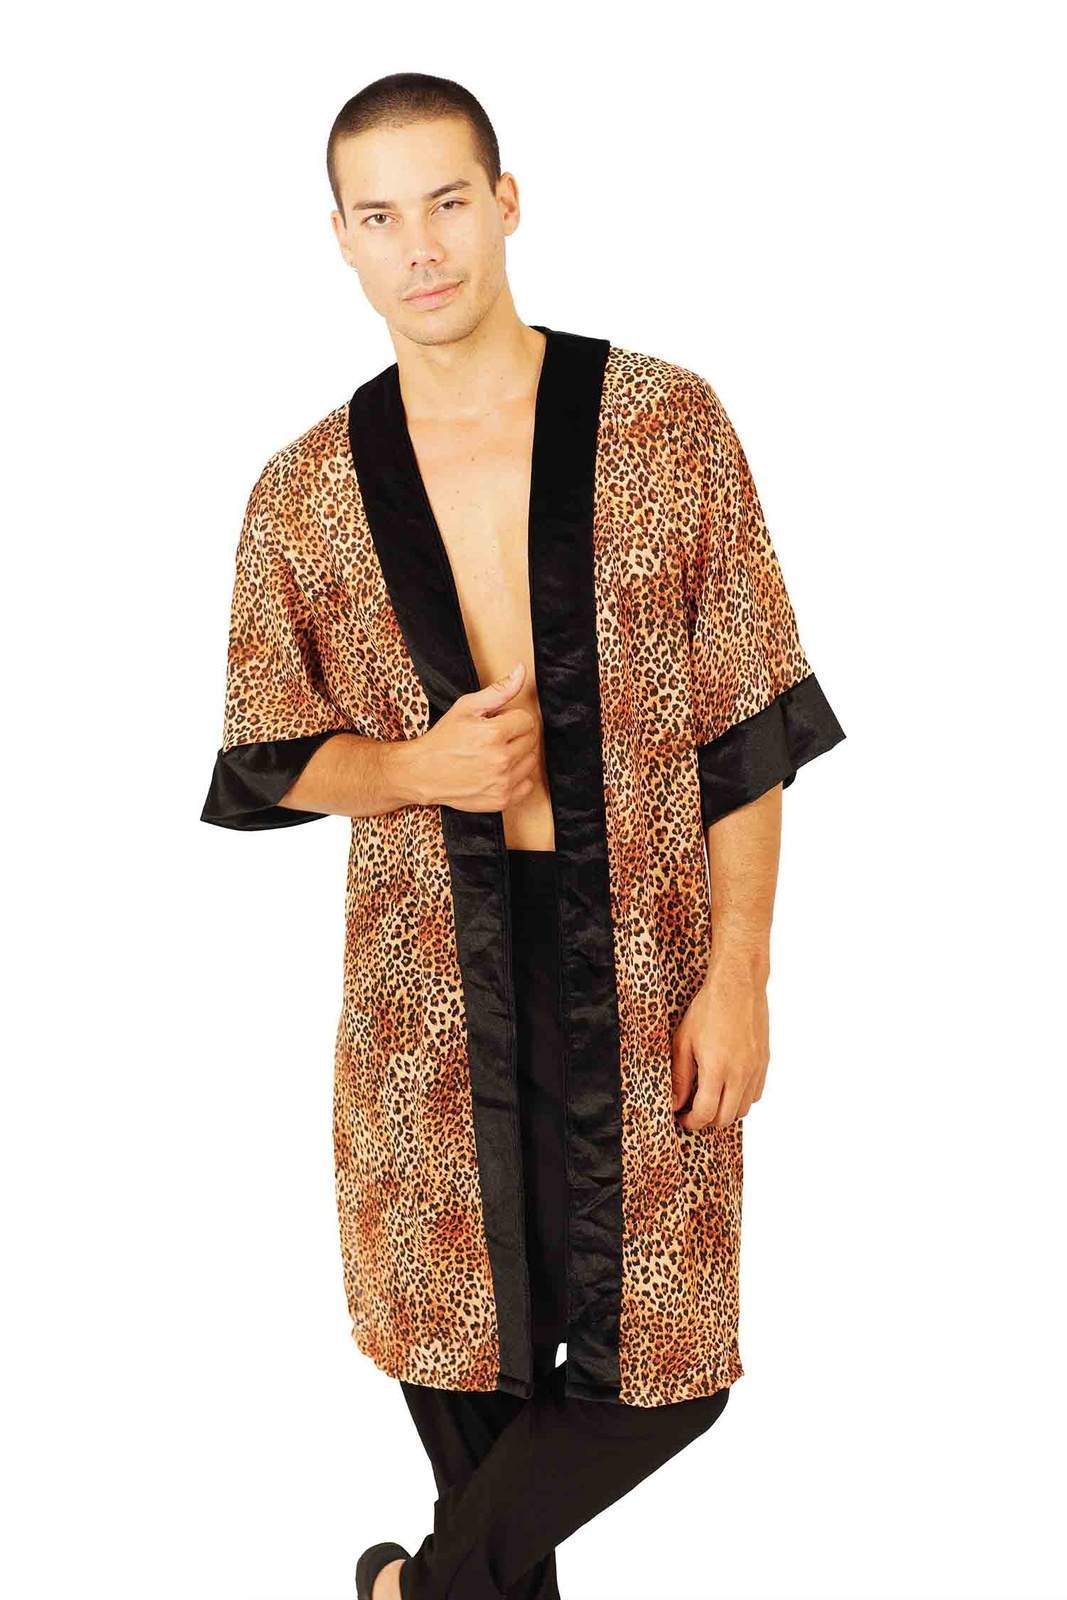 mens leopard robe from Love Khaos